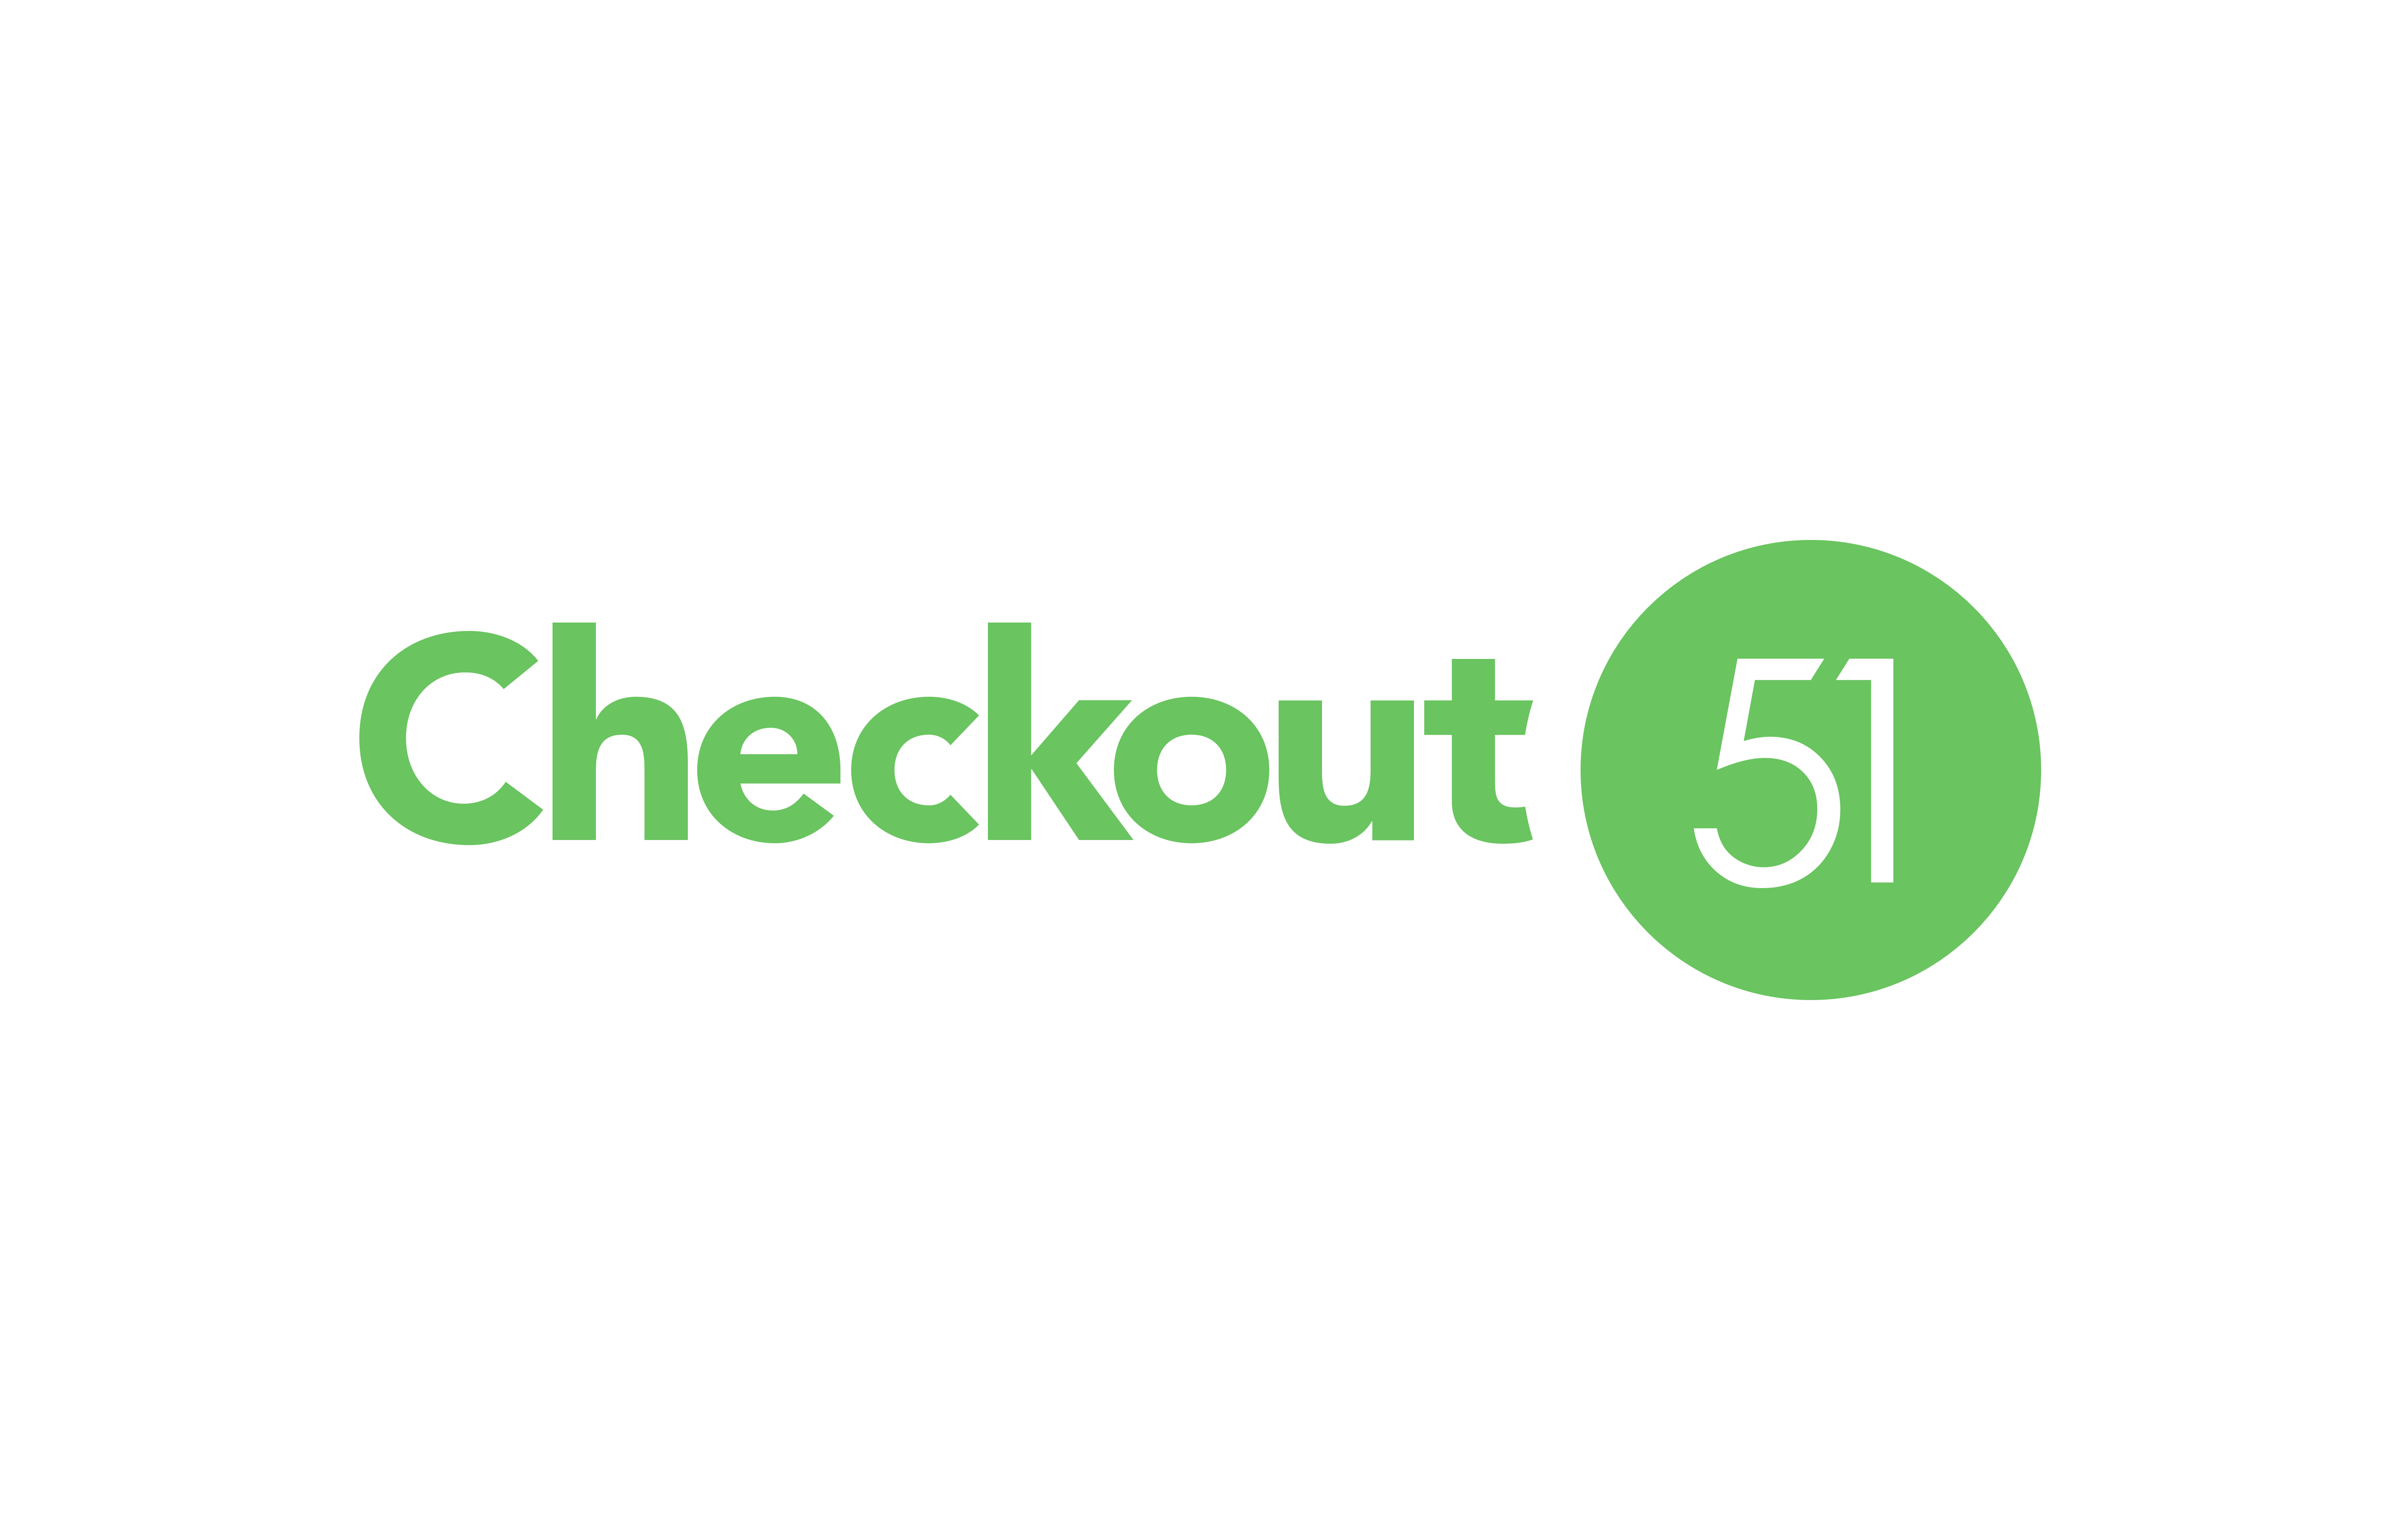 Checkout Logo - Checkout 51 - Save on the brands you love.